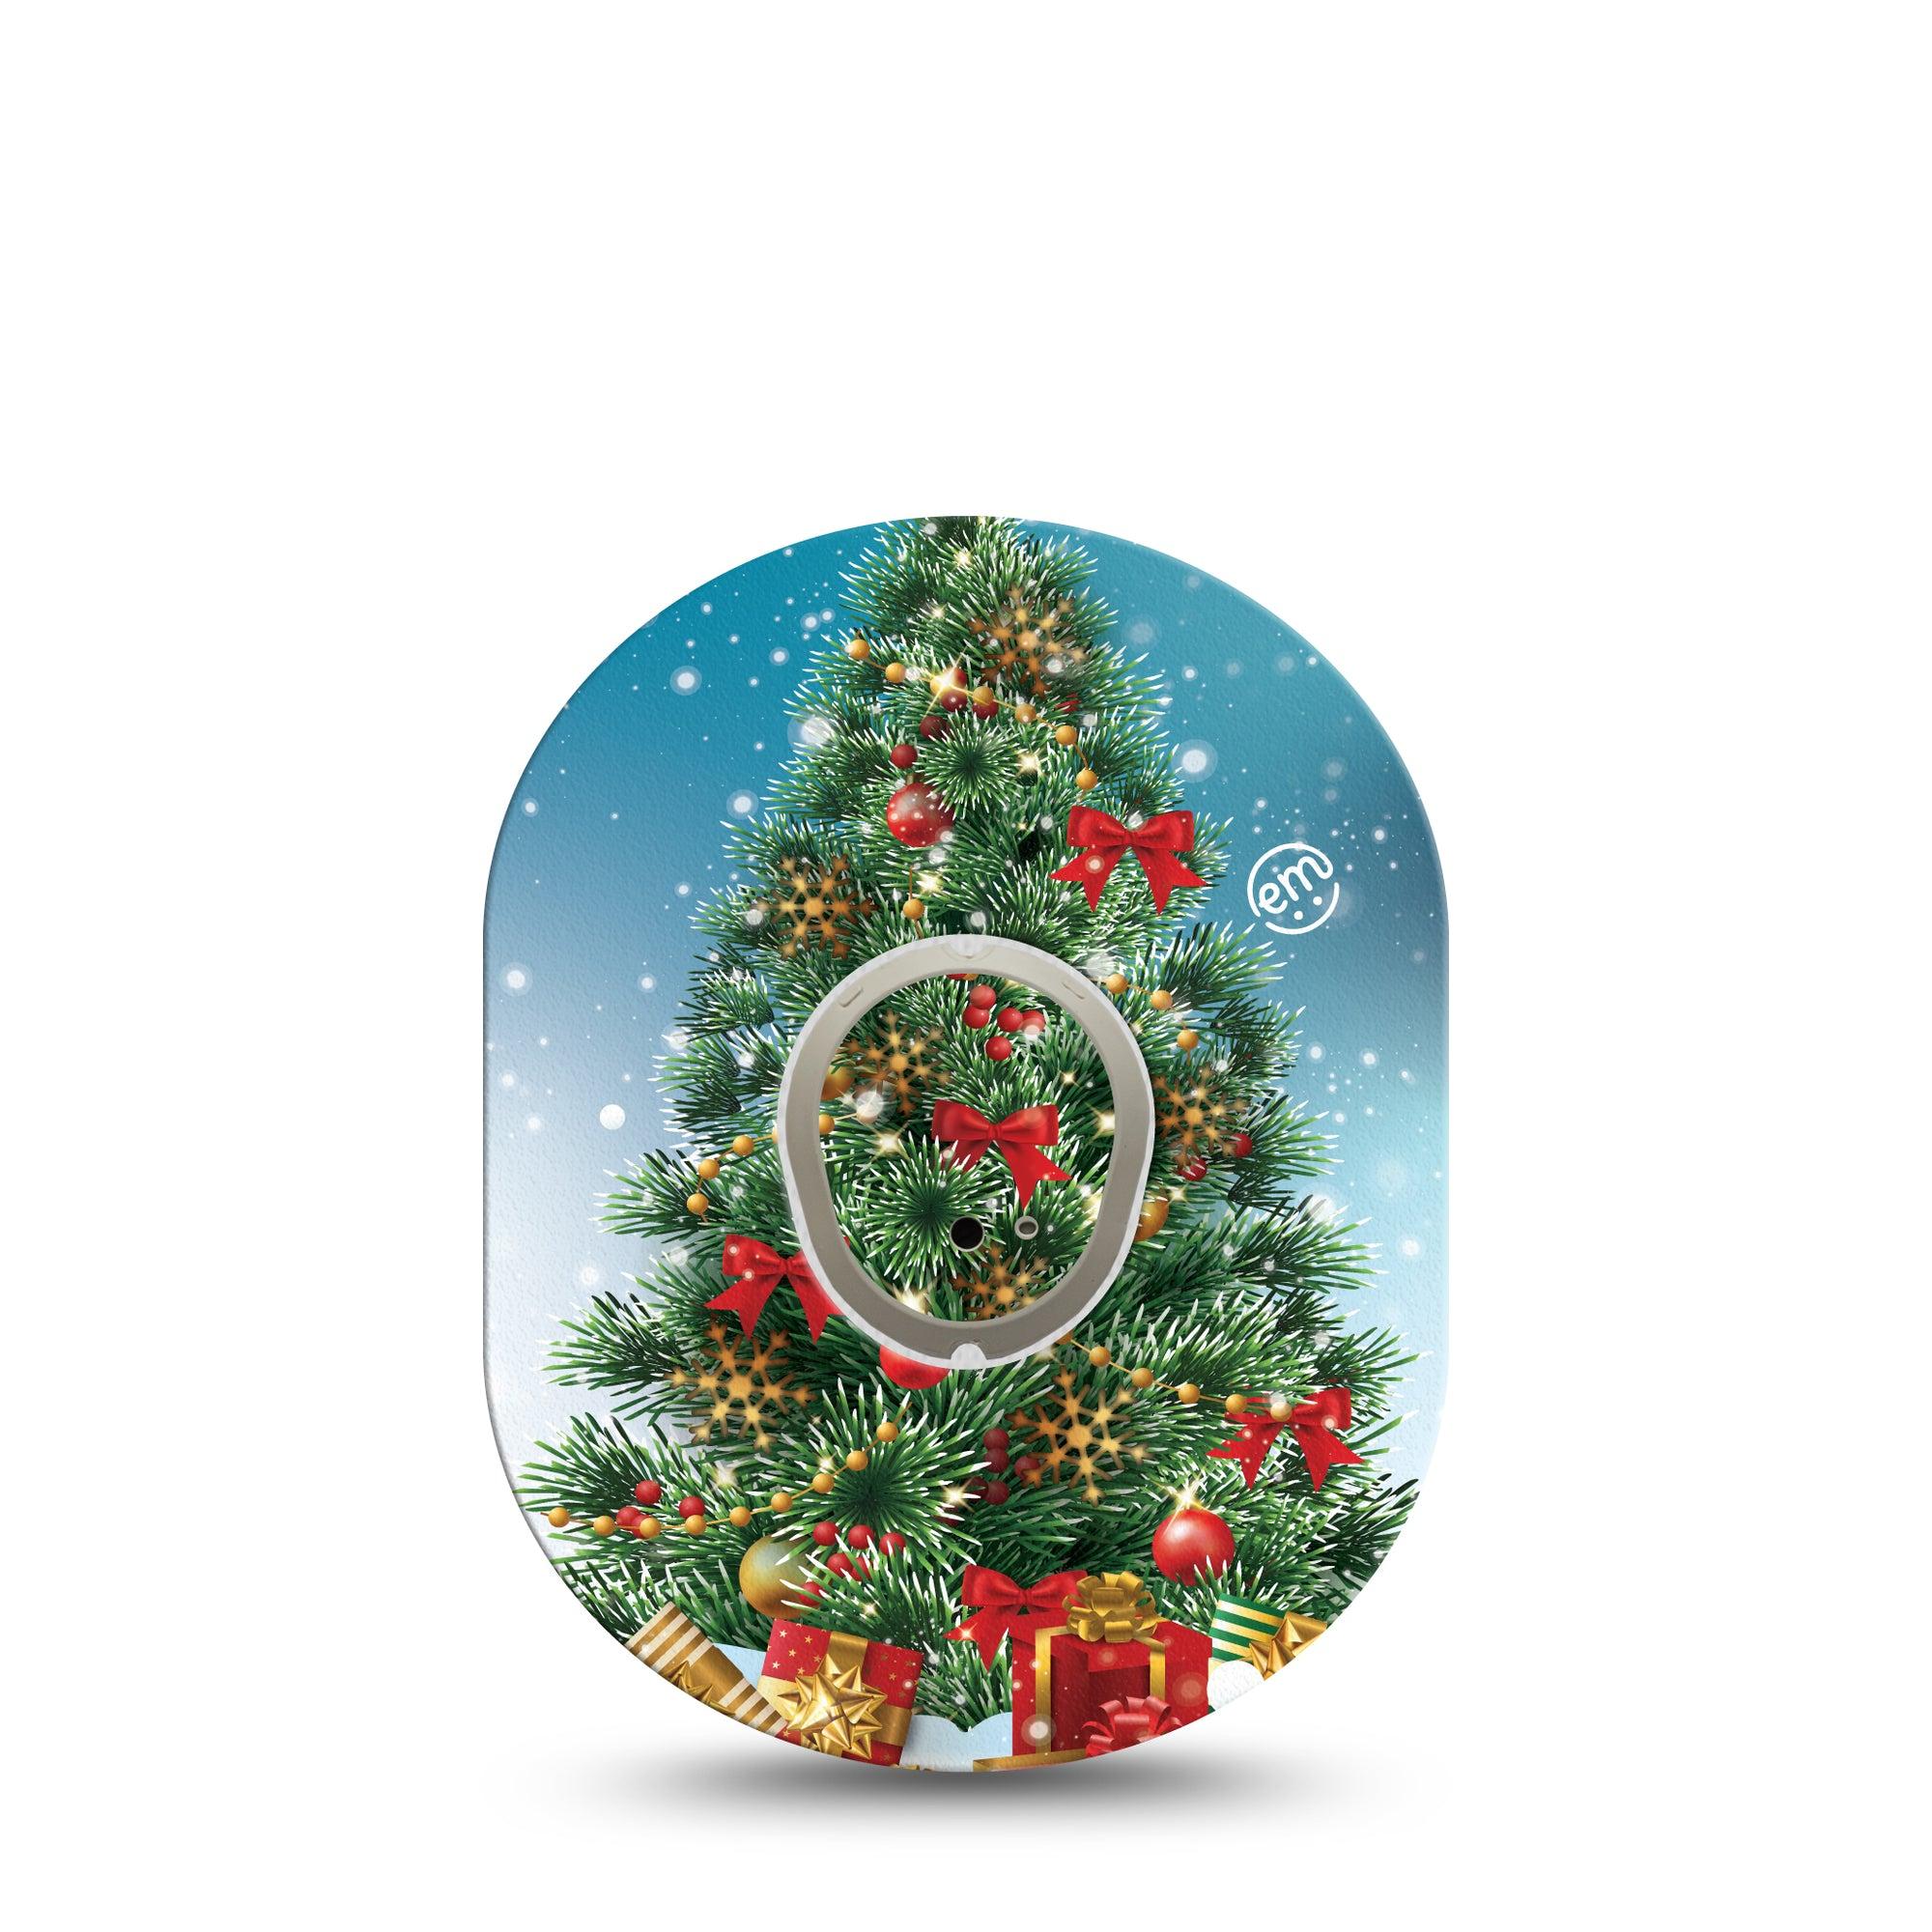 ExpressionMed Oh, Christmas Tree Dexcom G7 Transmitter Sticker, Single, Big Christmas Tree Inspired, Dexcom G7 Vinyl Center Sticker, With Matching Dexcom G7 Tape, CGM Overlay Patch Design